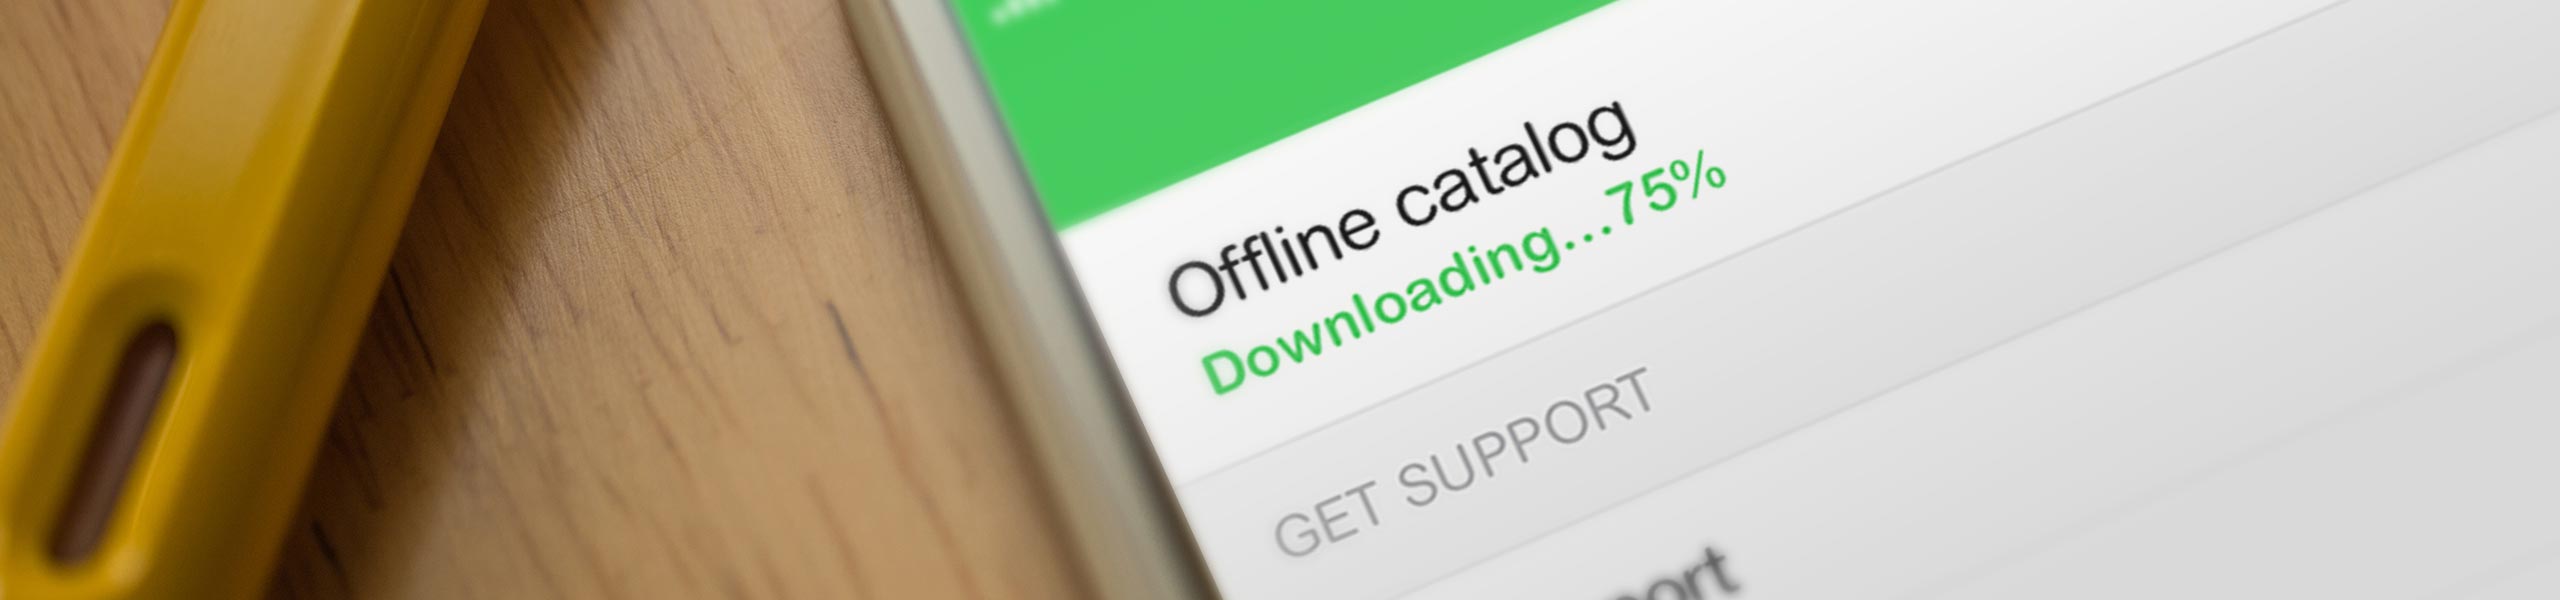 mySchneider app screen of downloading the offline catalog